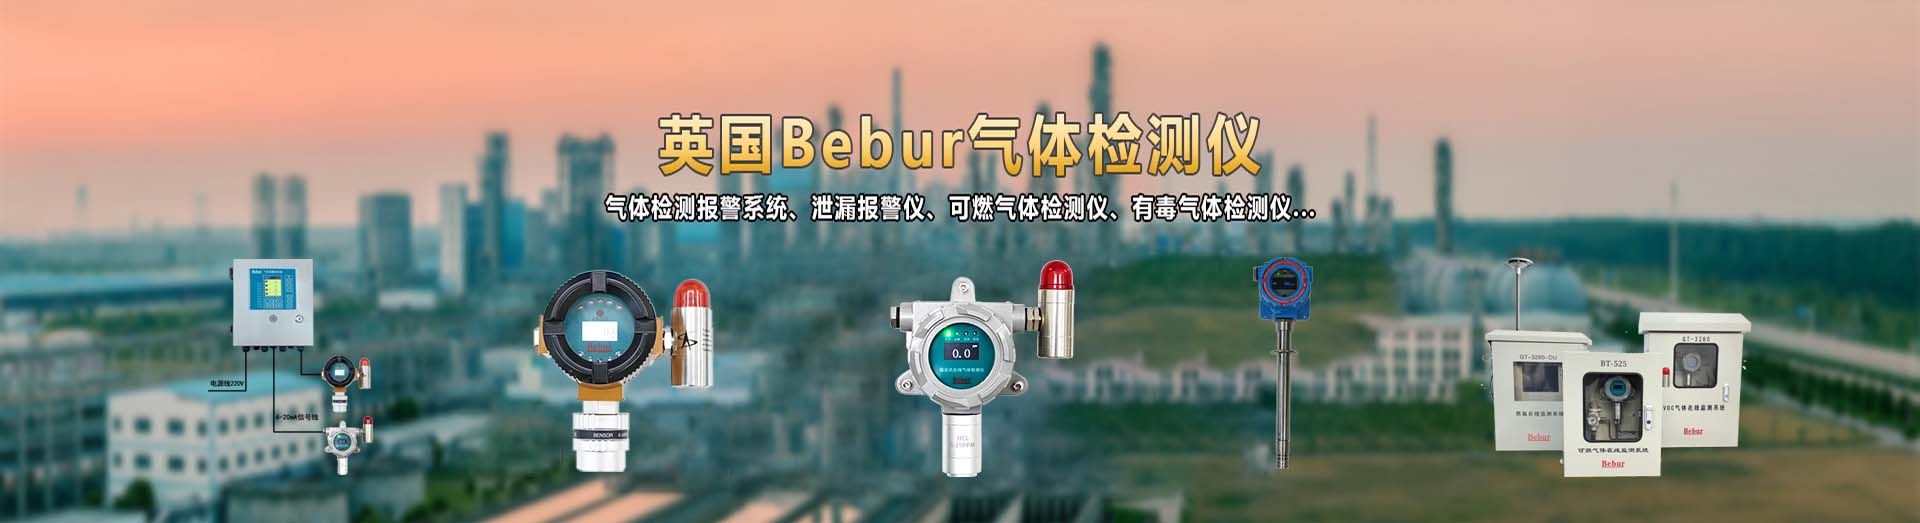 Bebur(巴倍尔)品牌气体检测仪